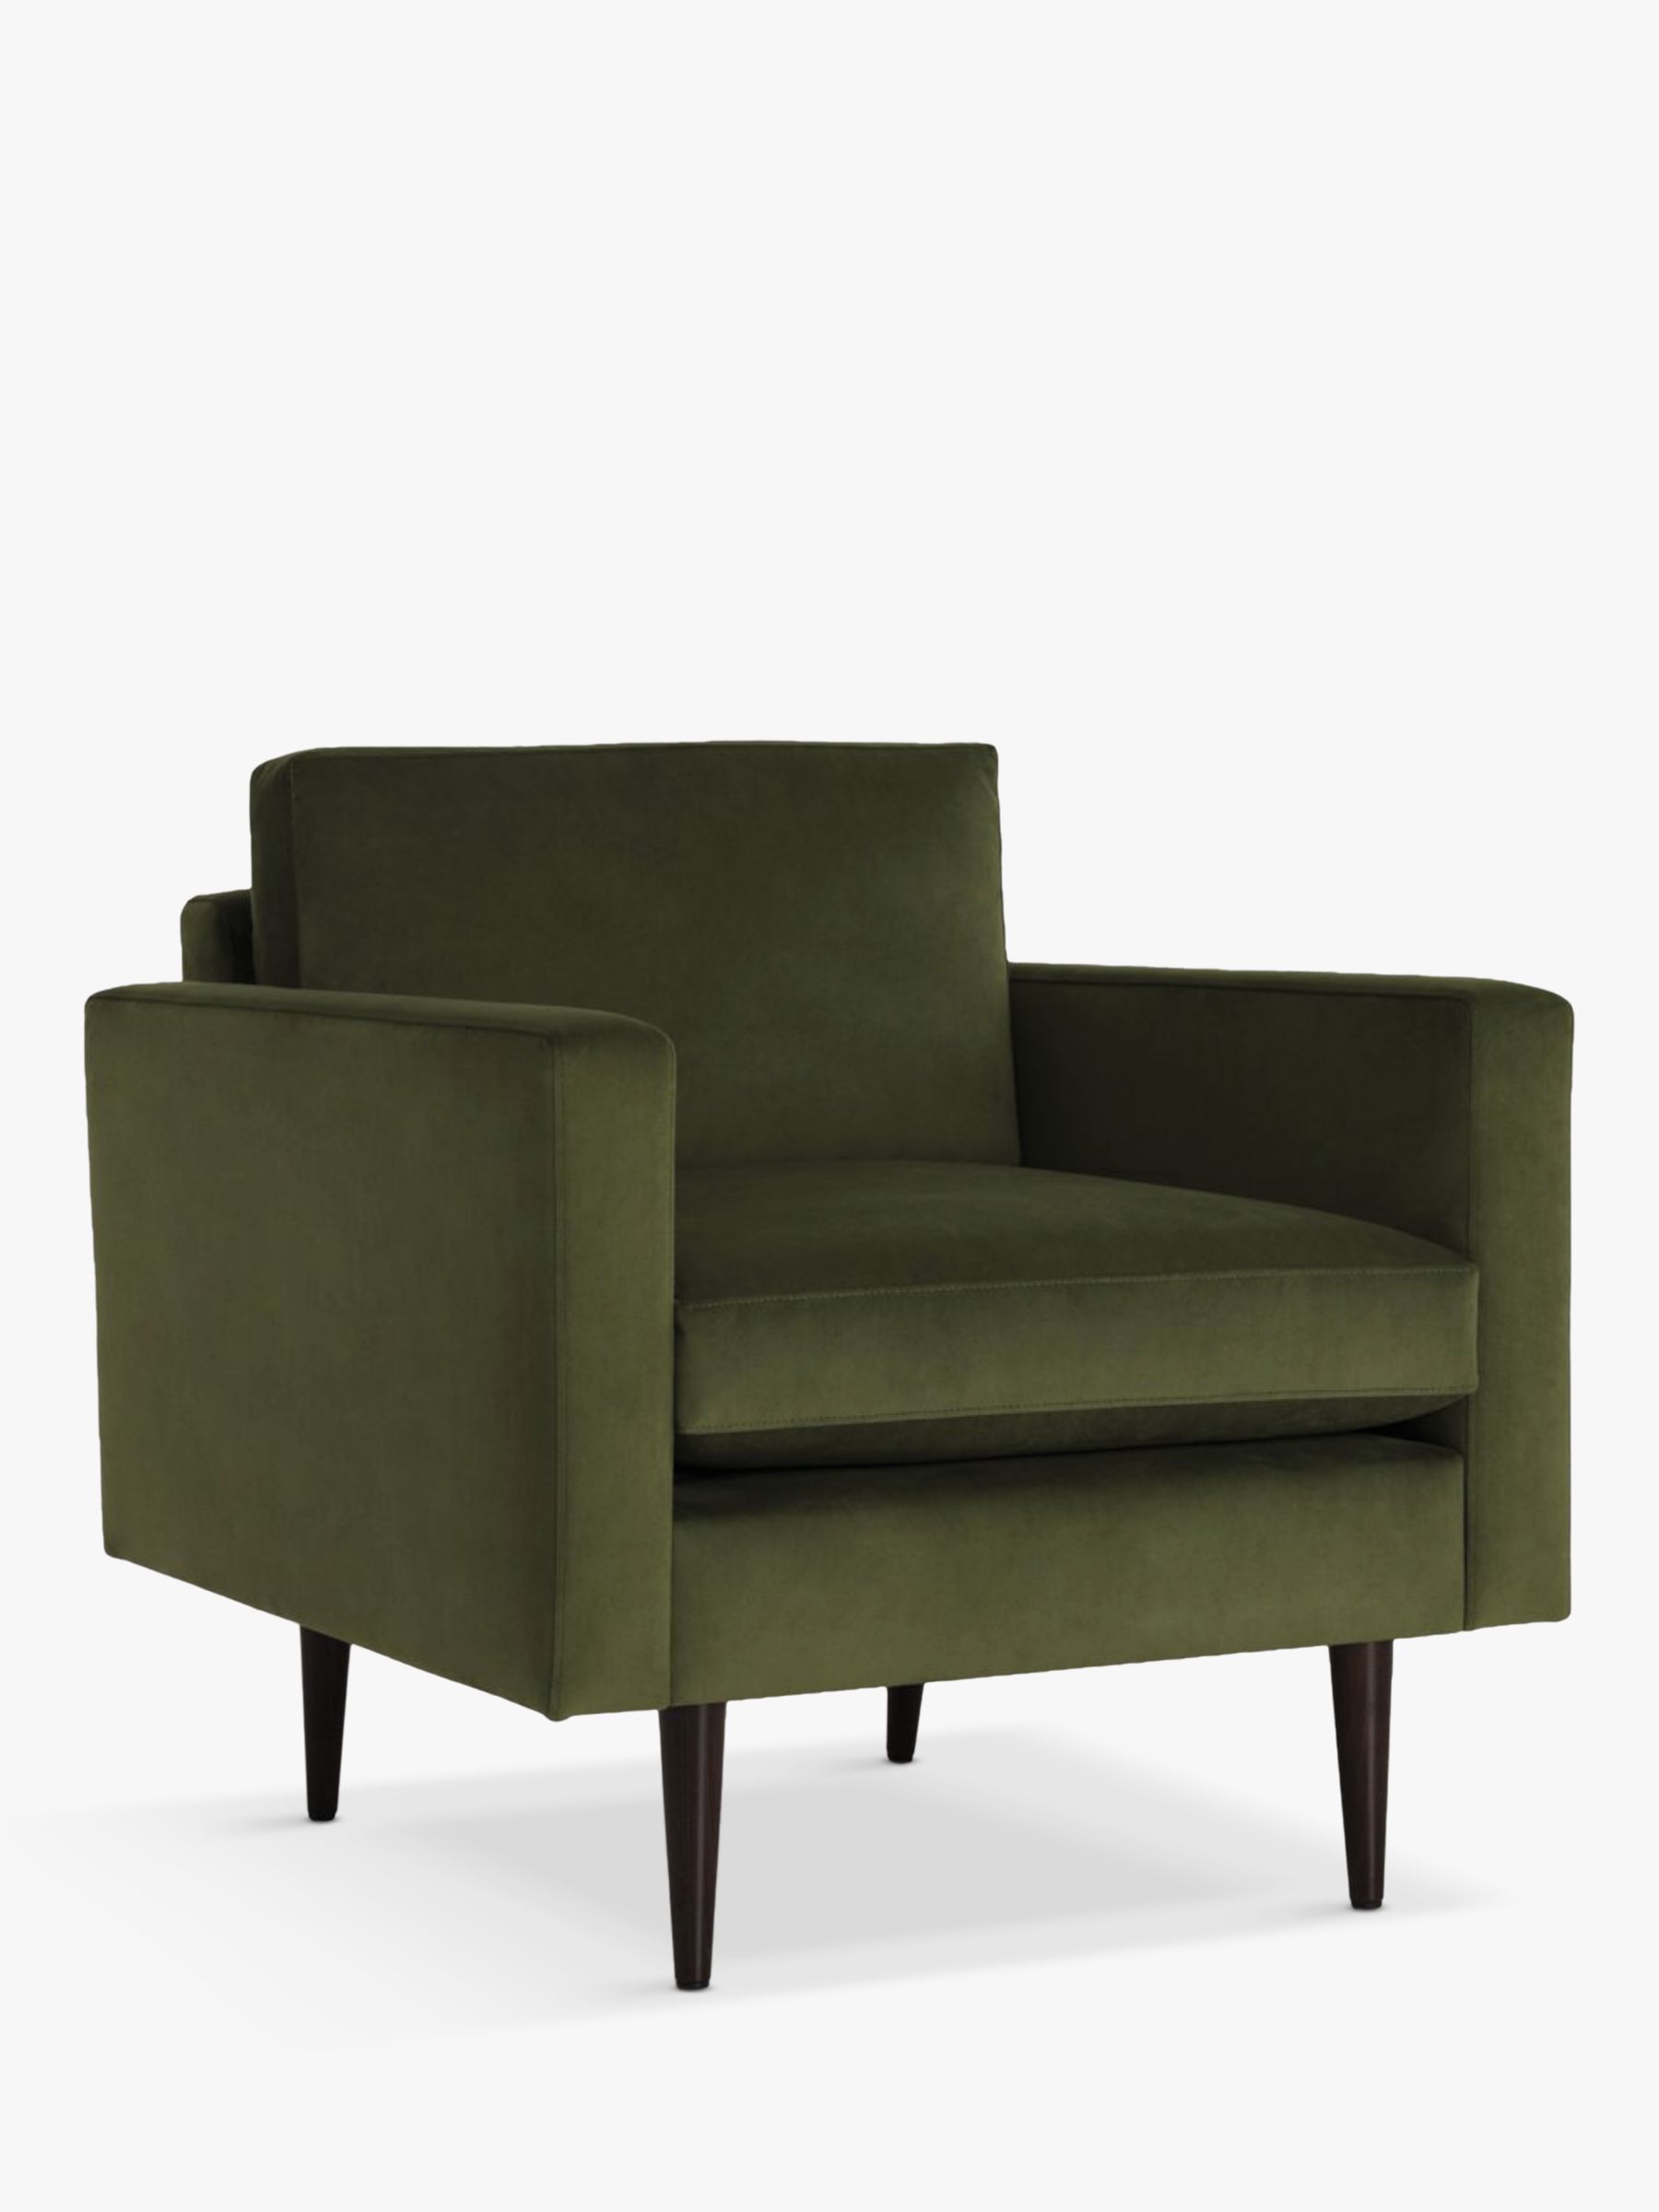 Photo of Swyft model 01 armchair